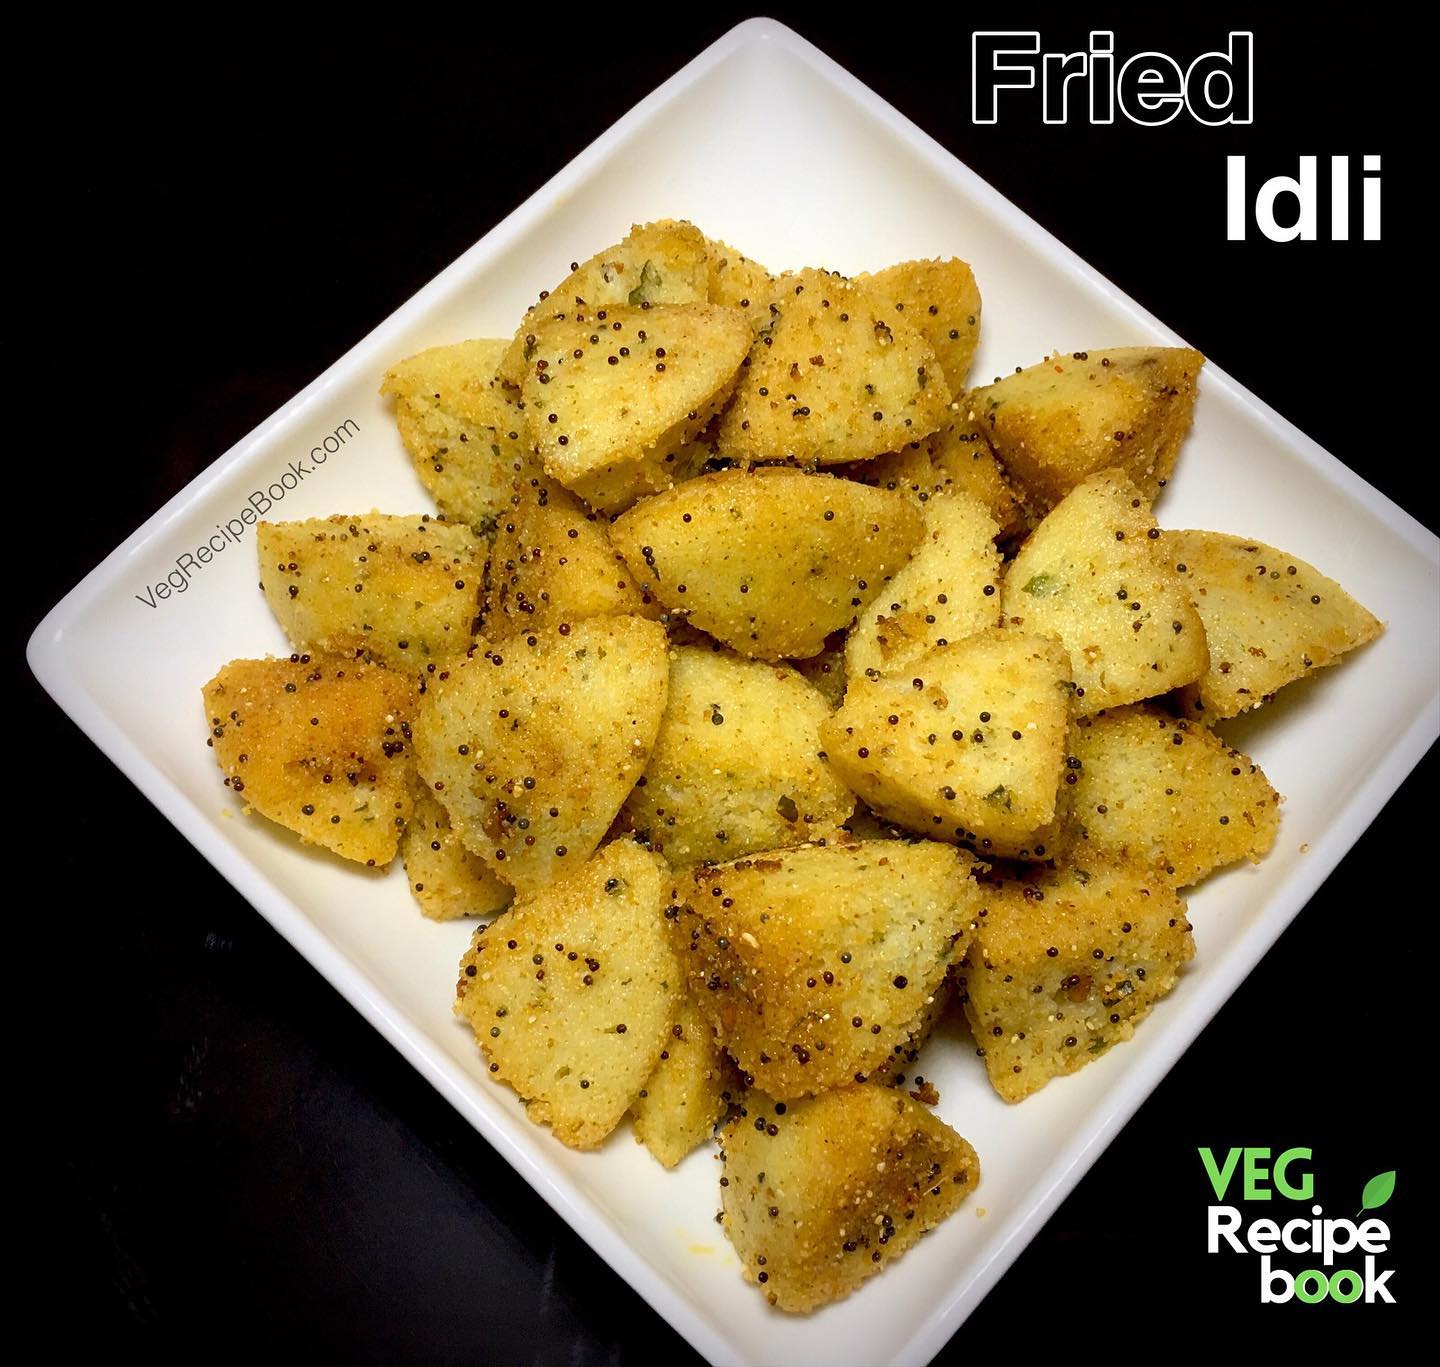 Fried idli ~ Tasty and Quick snack made with sooji (semolina)

Step by Step Recipe: https://vegrecipebook.com/chinese-style-veg-fried-idli-recipe/ 
.
.
.
Follow me @thevegrecipebook for more amazing Recipes.
.
.
.
#friedidli #idli #idlichutney #idlisambhar #friedidli😋 #vegrecipebook #itsmegrd #garuskitchen #snacking #snackattack #snackimport #snackideas #snacksehat #snackkekinian #snackfood #snackkorea #snackbouquet #snackrecipes #snackrecipe #snacksrecipe #delicious #breakfast #homemade #snackkiloan #snackbox #instagood #snackmurah #breakfastrecipes #snacktime #snacksaludable